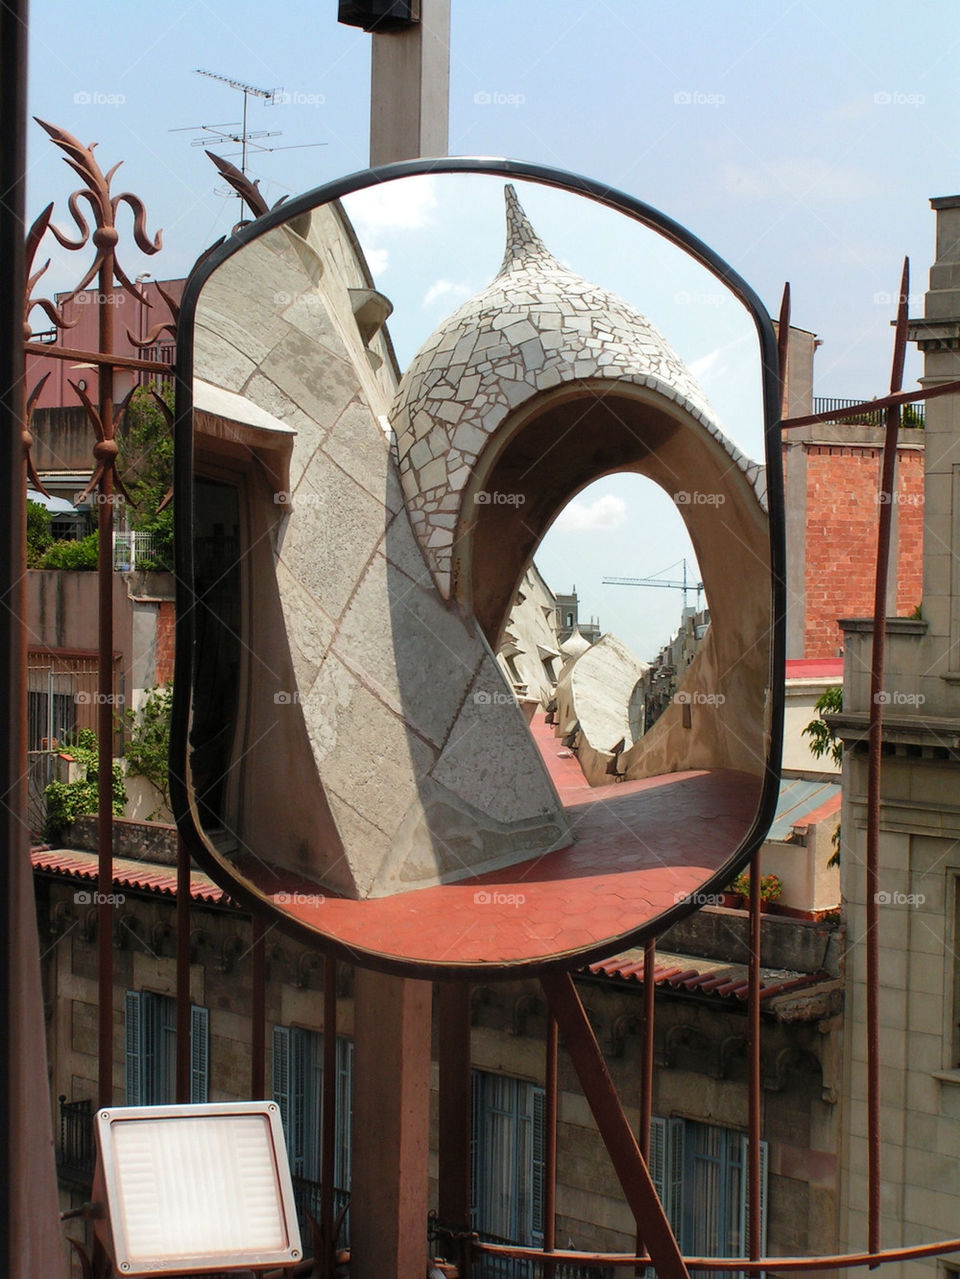 architecture mirror gaudi barcelona by cygnusmage